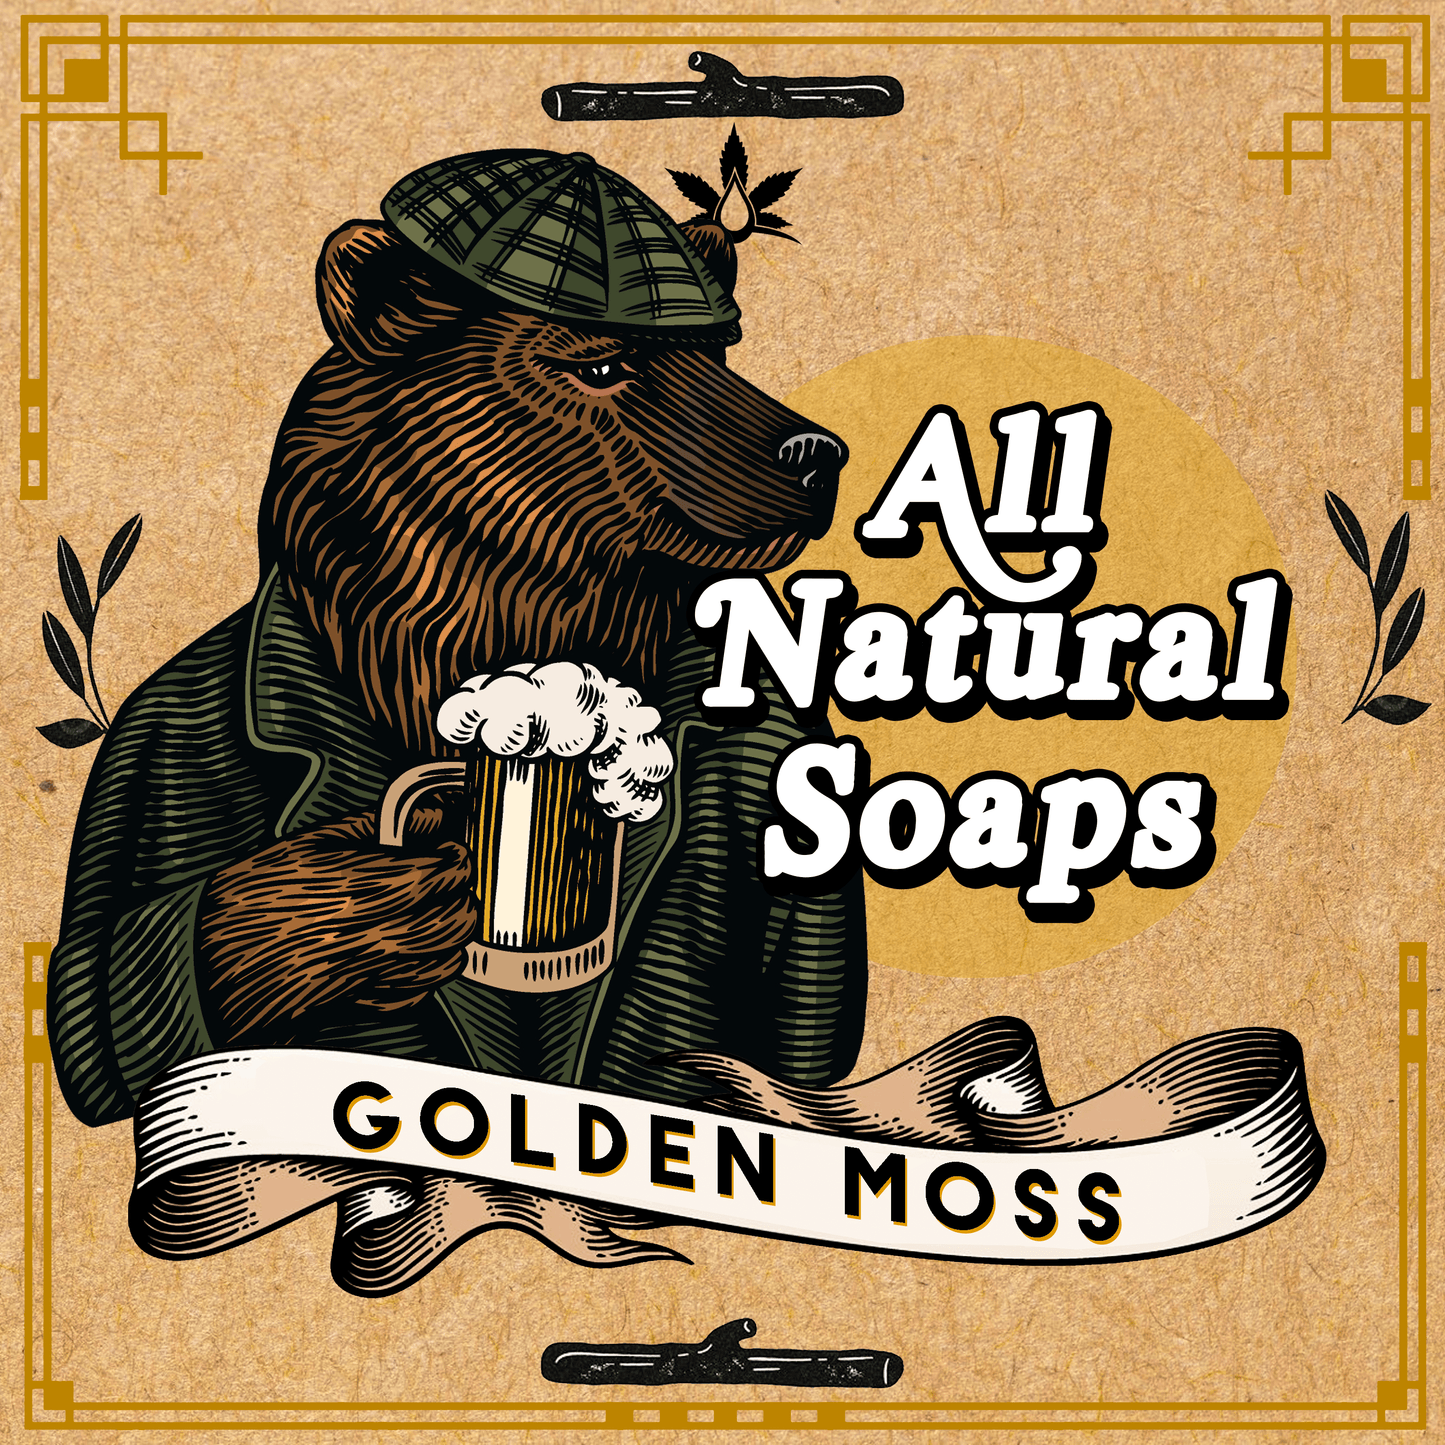 Natural Soap - Golden Moss - All Natural Soaps